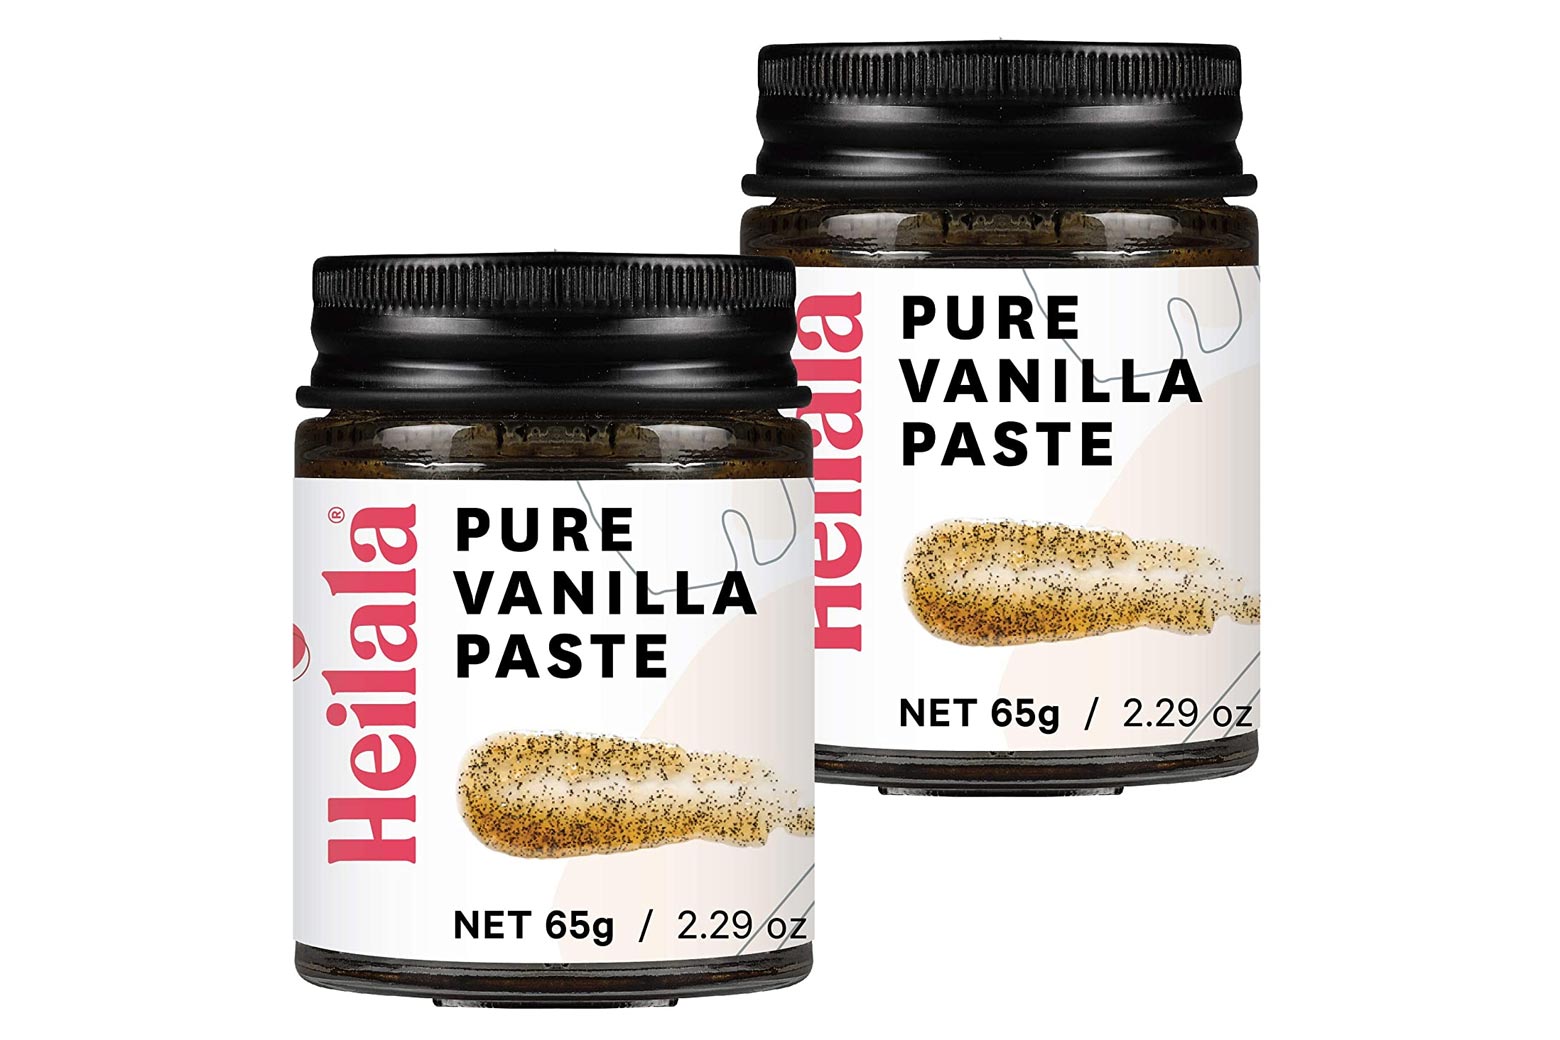 Two jars of vanilla paste